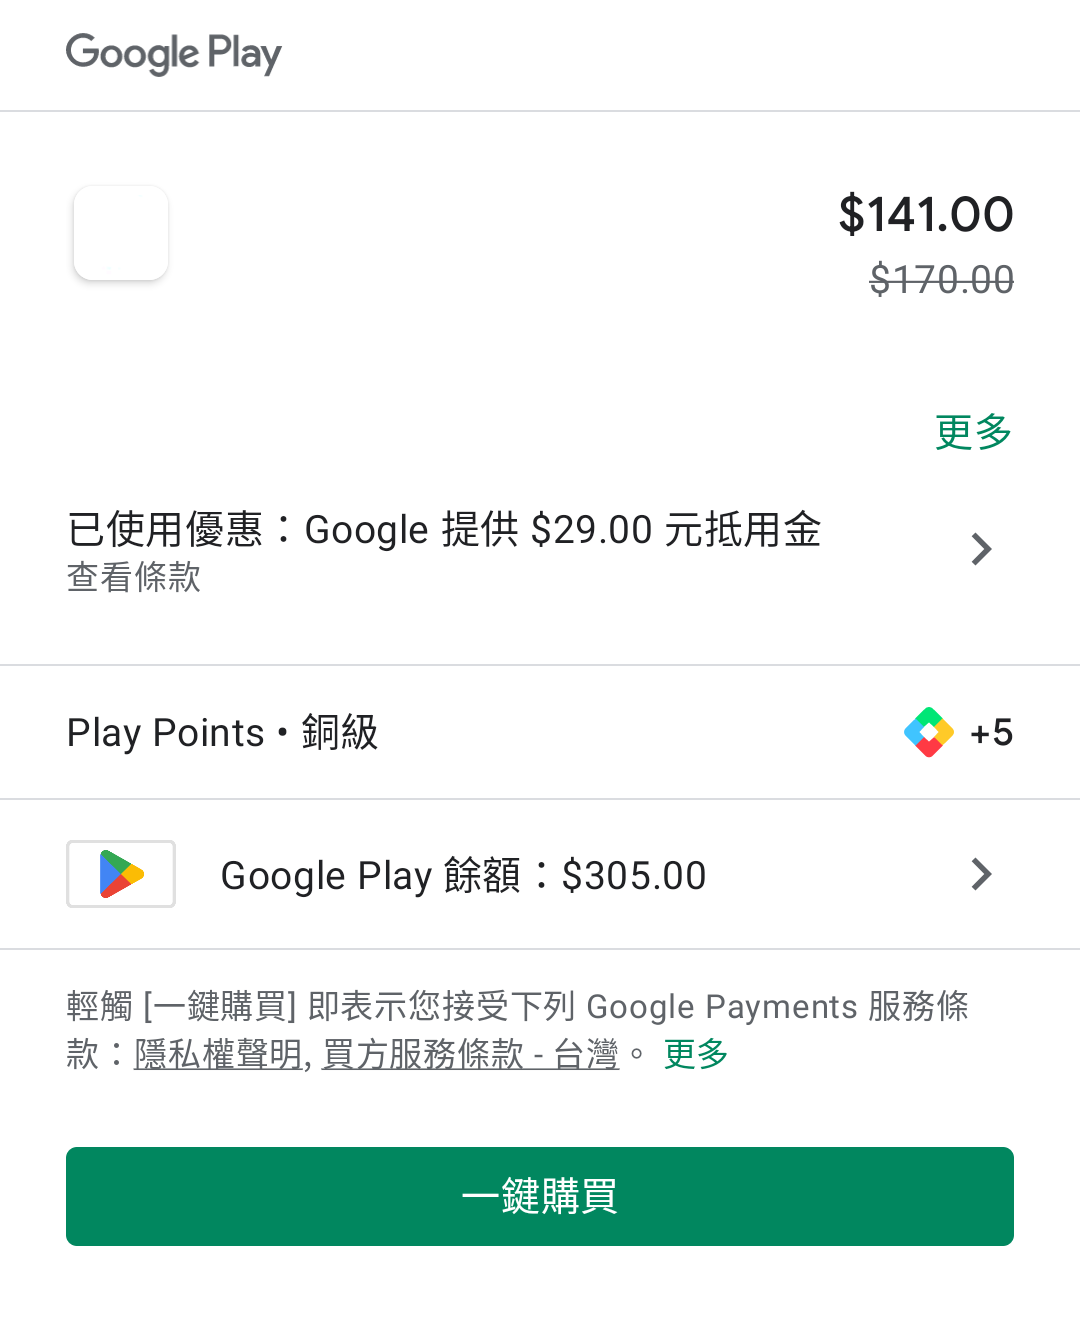 Google Play 使用優惠：Google 提供 $29.00 元抵用金